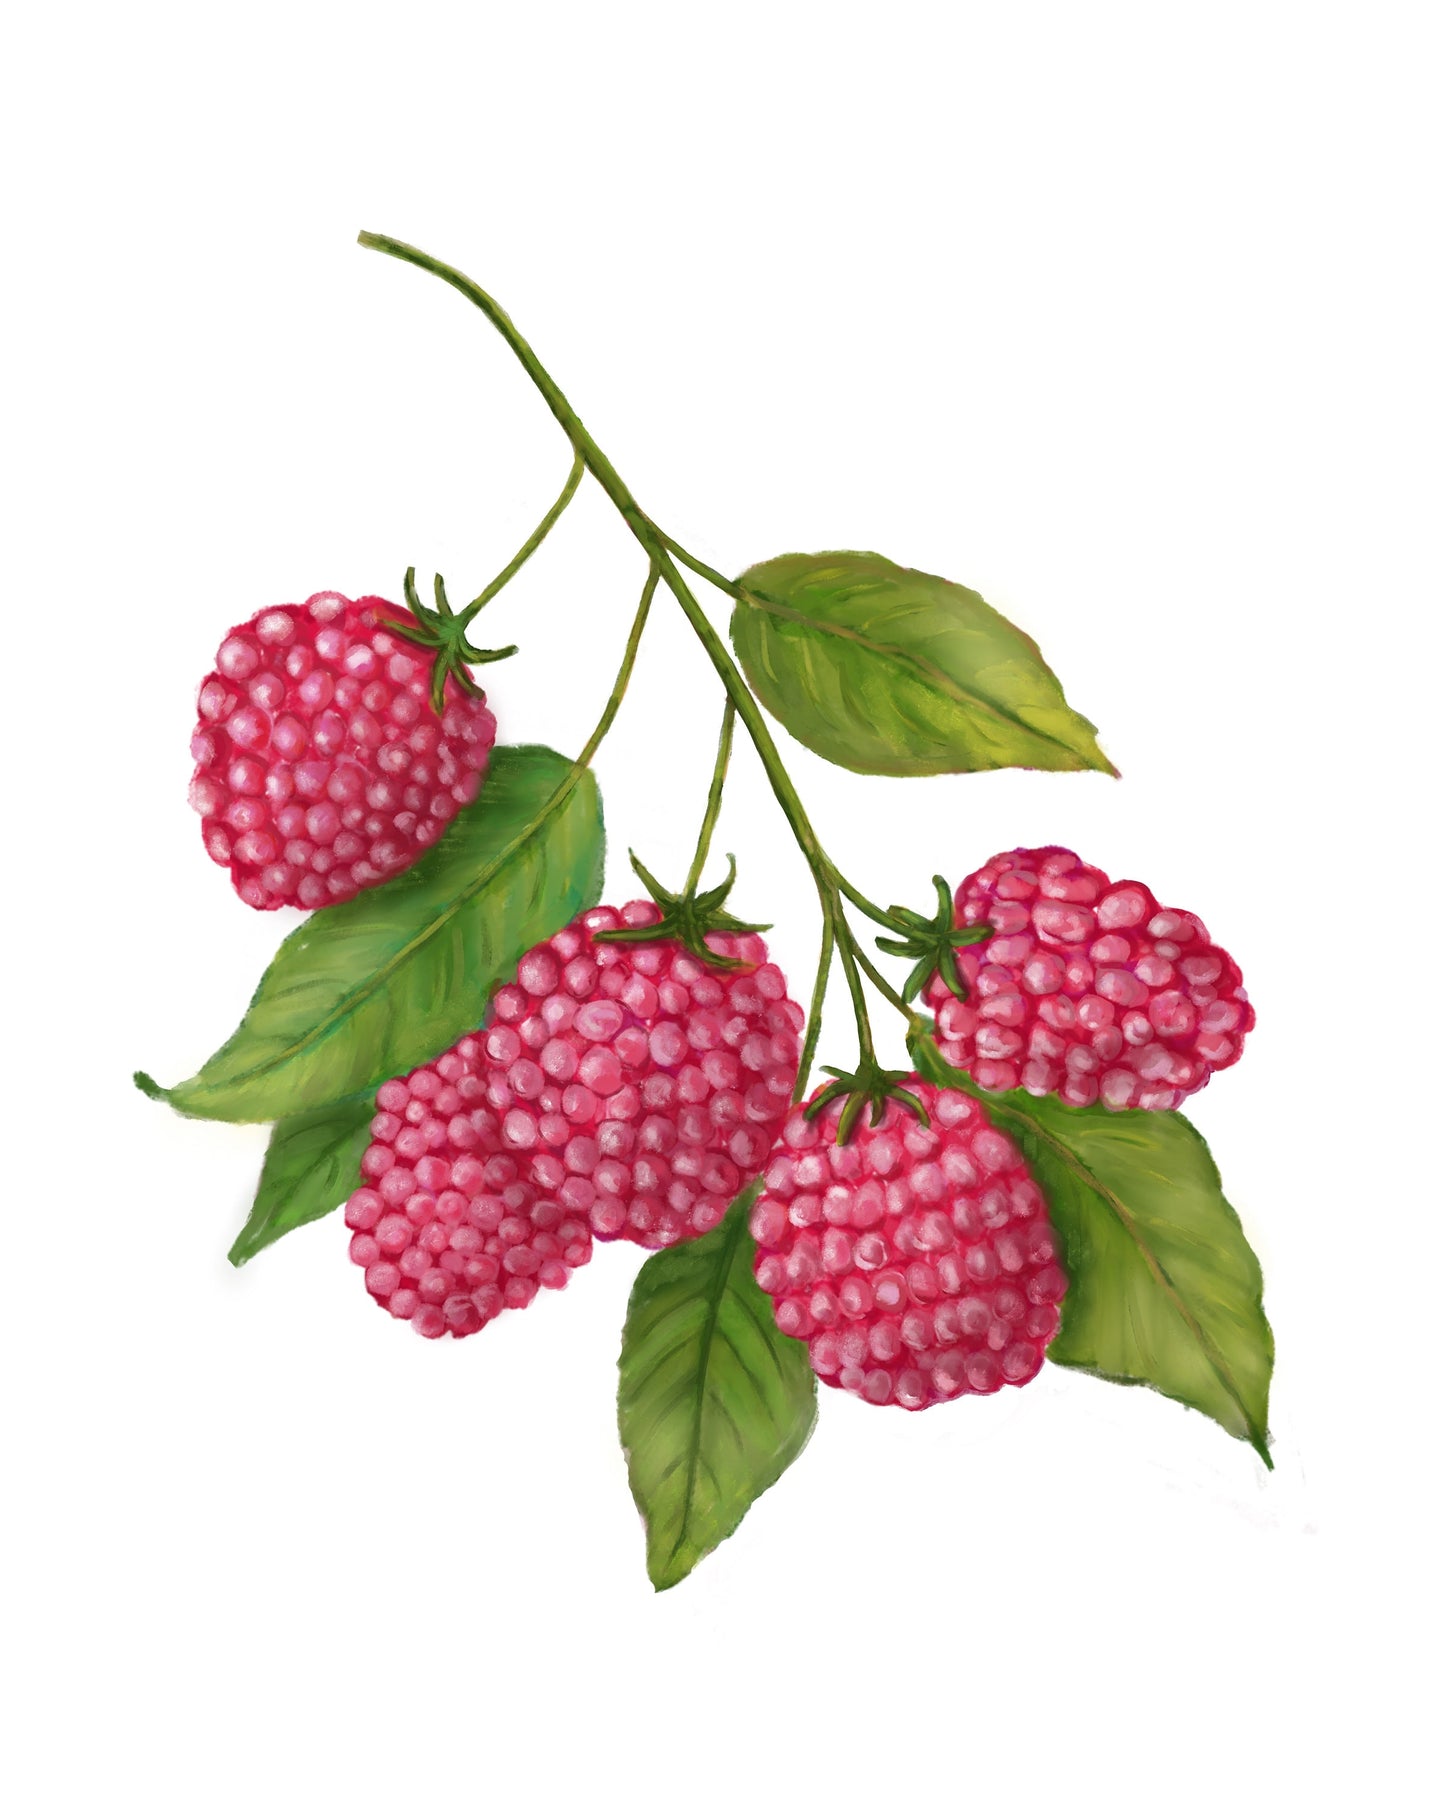 Raspberry Art Print, Raspberry Wall Art, Kitchen Wall Hanging, Dining Room Decor, Berry Painting, Fruit Illustration, Farmhouse Wall Decor